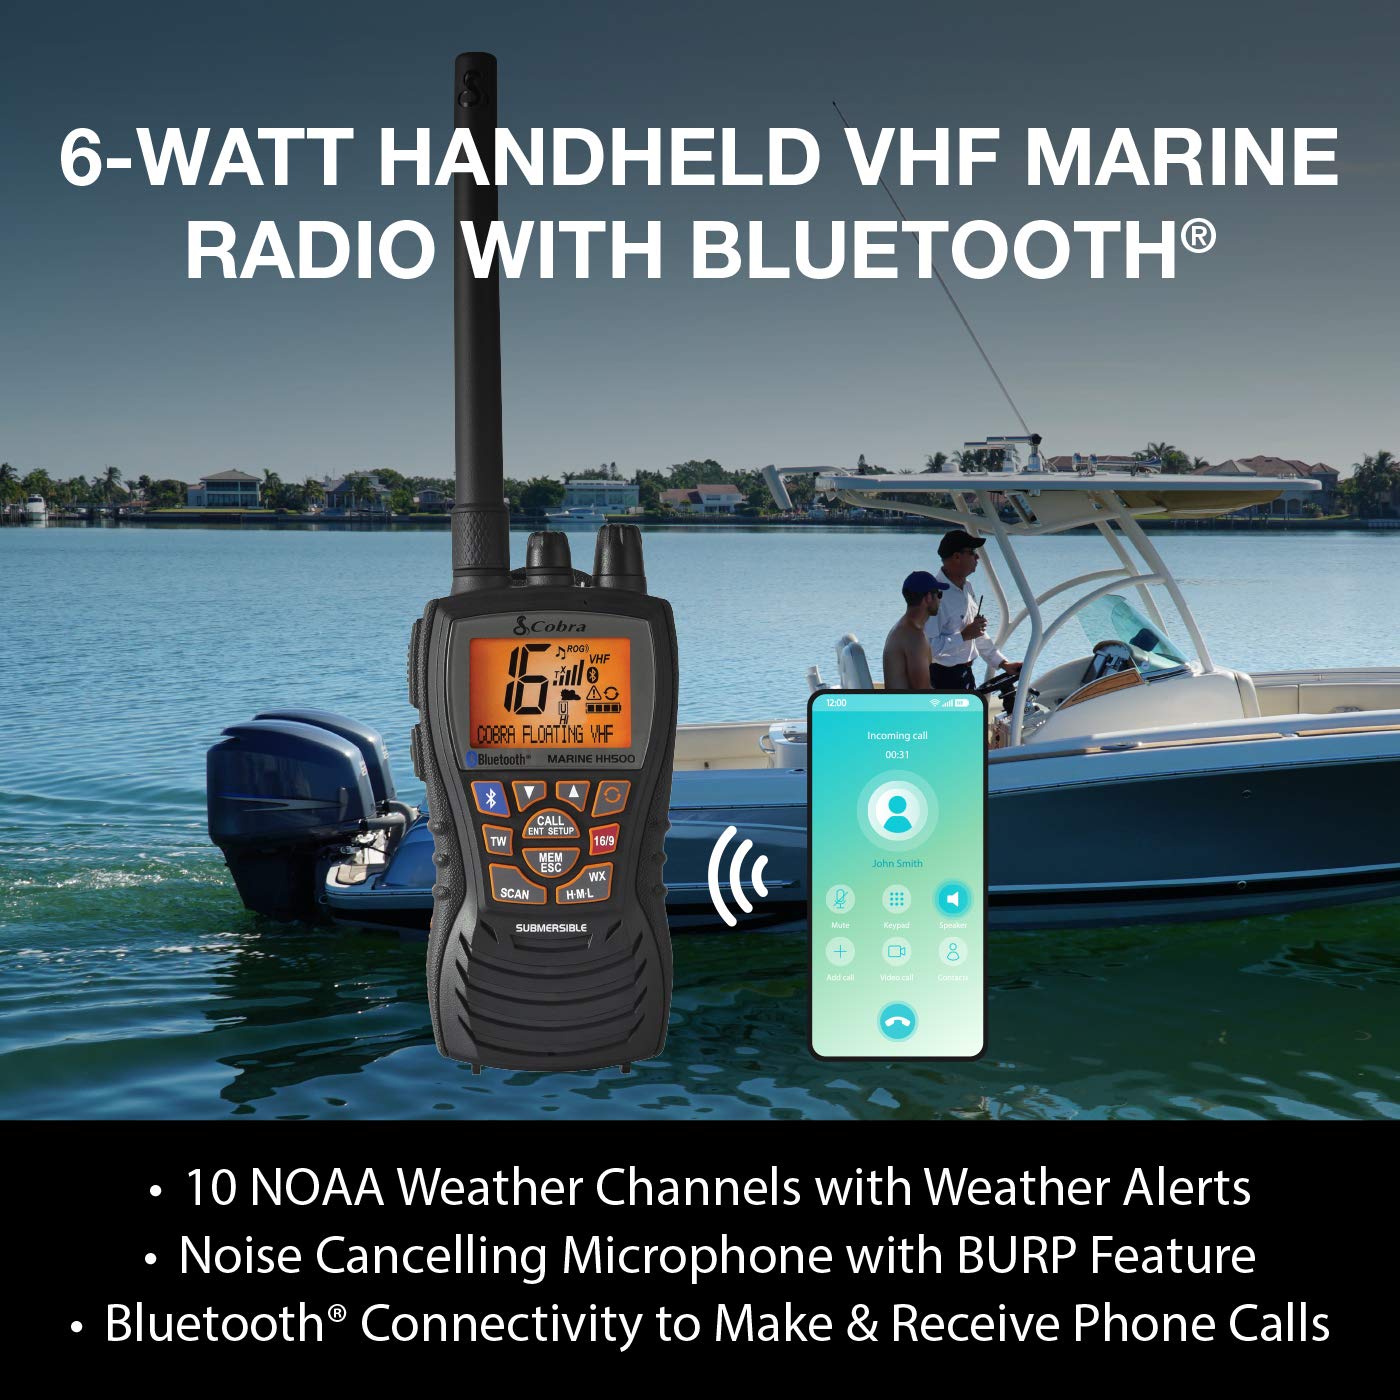 Cobra MR HH500 FLT BT Handheld Floating VHF Radio – 6 Watt, Bluetooth, Submersible, Noise Cancelling Mic, Backlit LCD Display, Memory Scan, Black